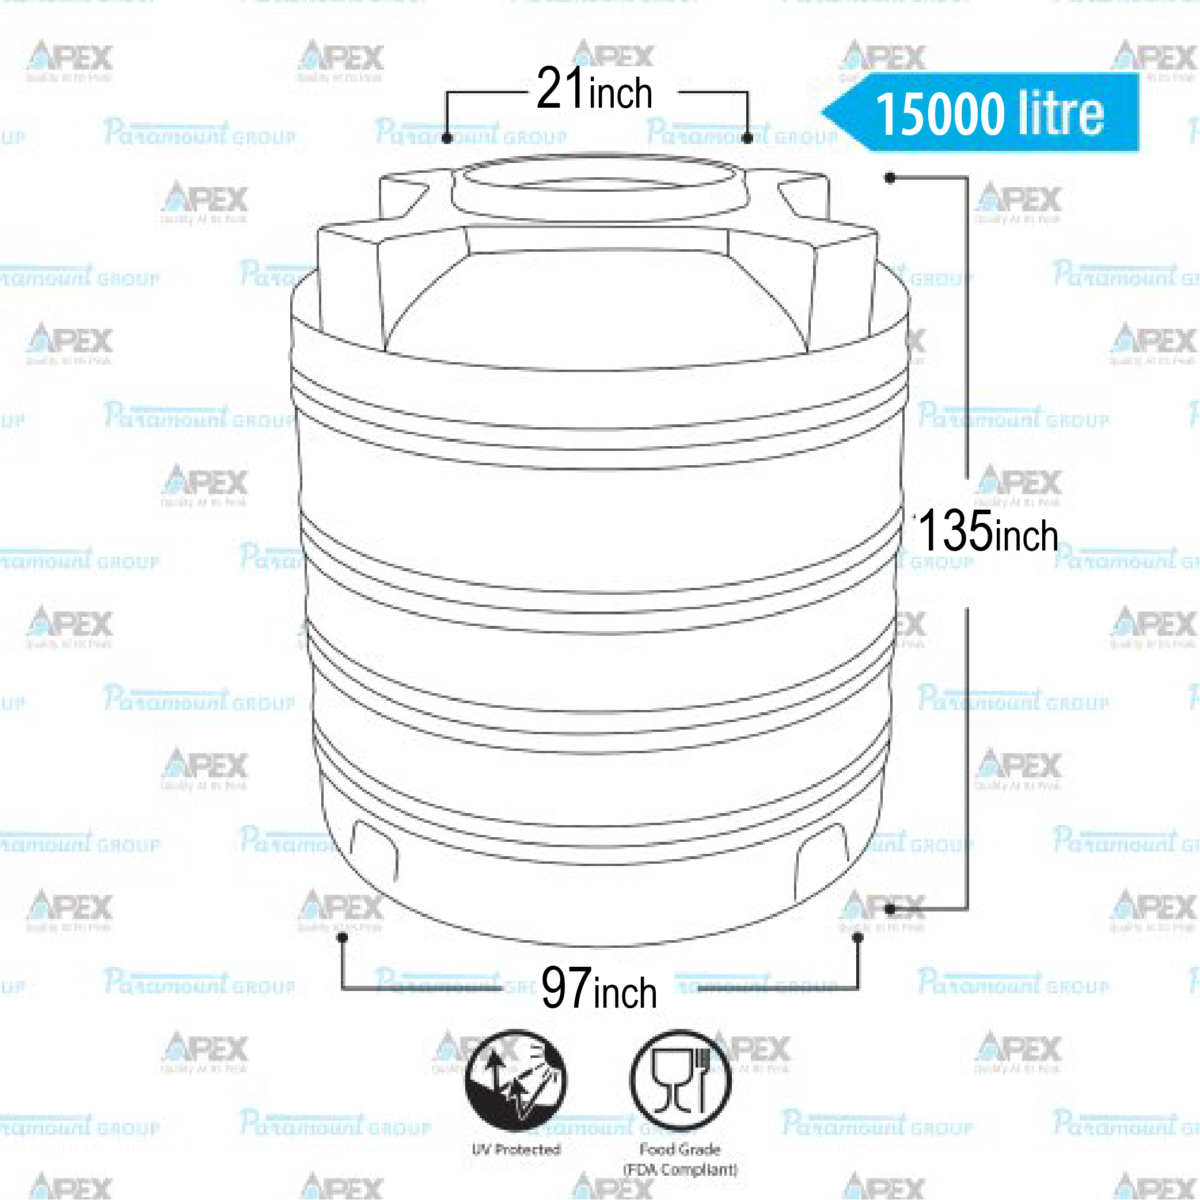 15000 Litre - Apex Water Tank - S Series